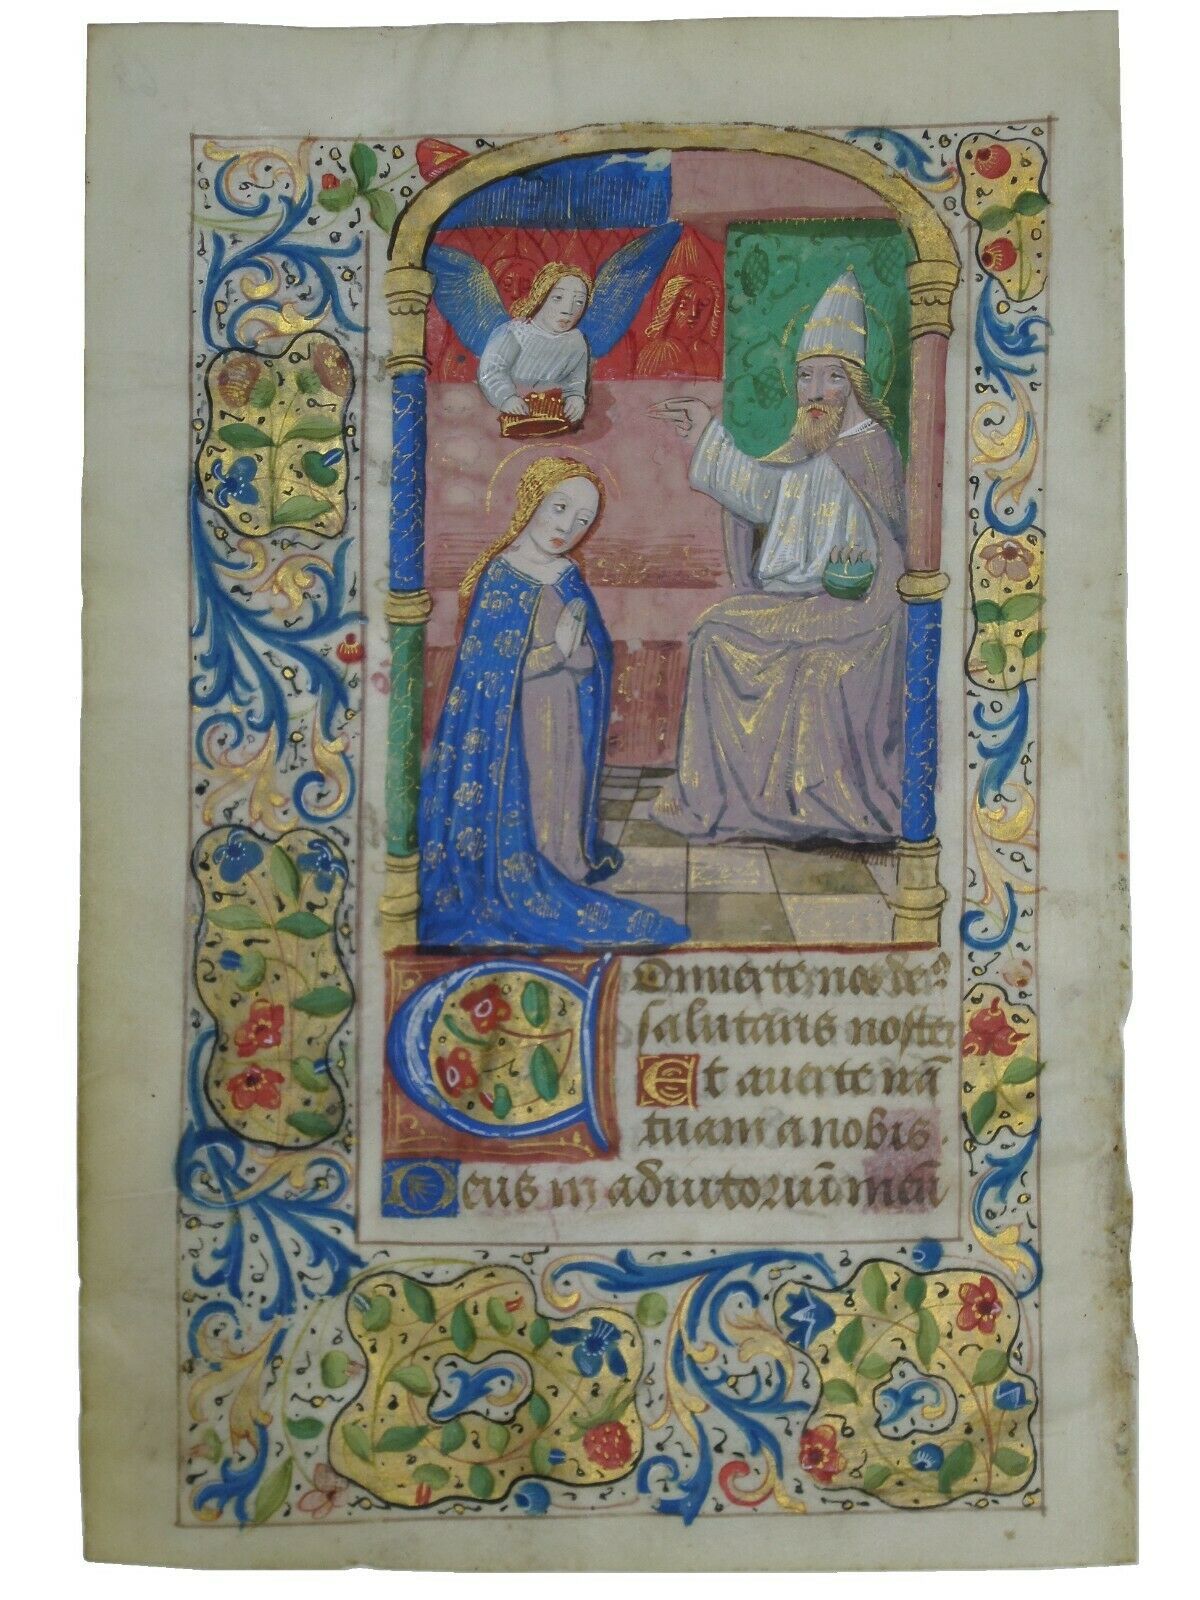 ILLUMINATED MANUSCRIPT BOOK OF HOURS LEAF C.1490 THE CORONATION OF THE VIRGIN